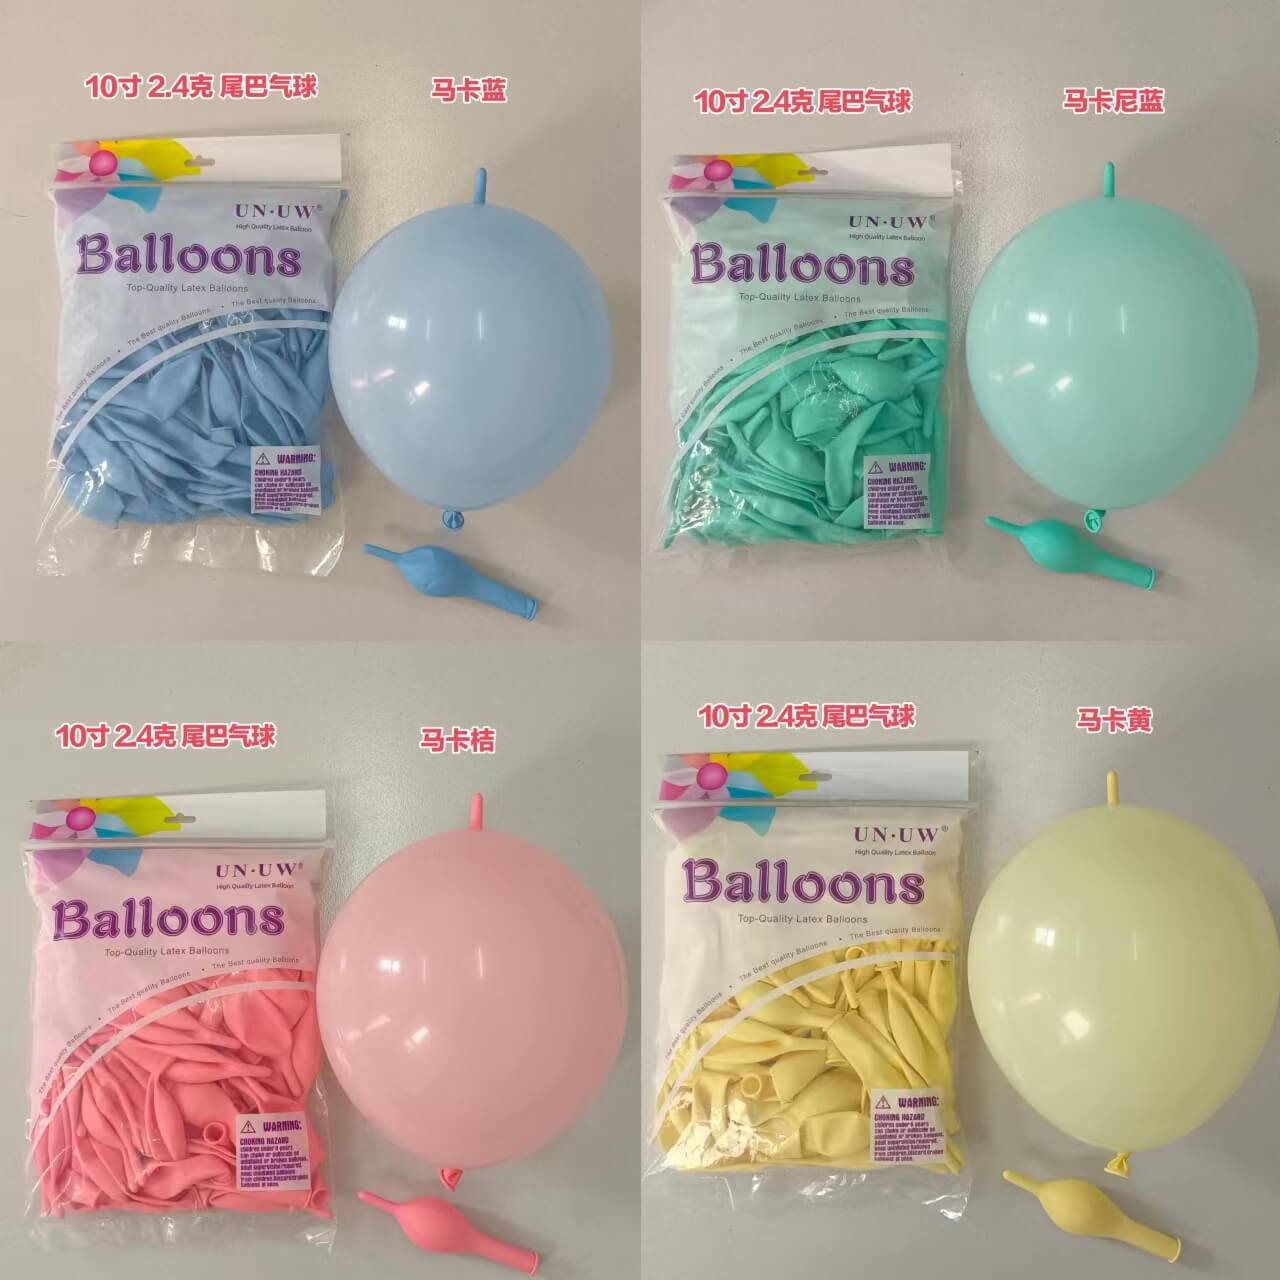 Premium Latex Balloons Filled with Helium - Haorun